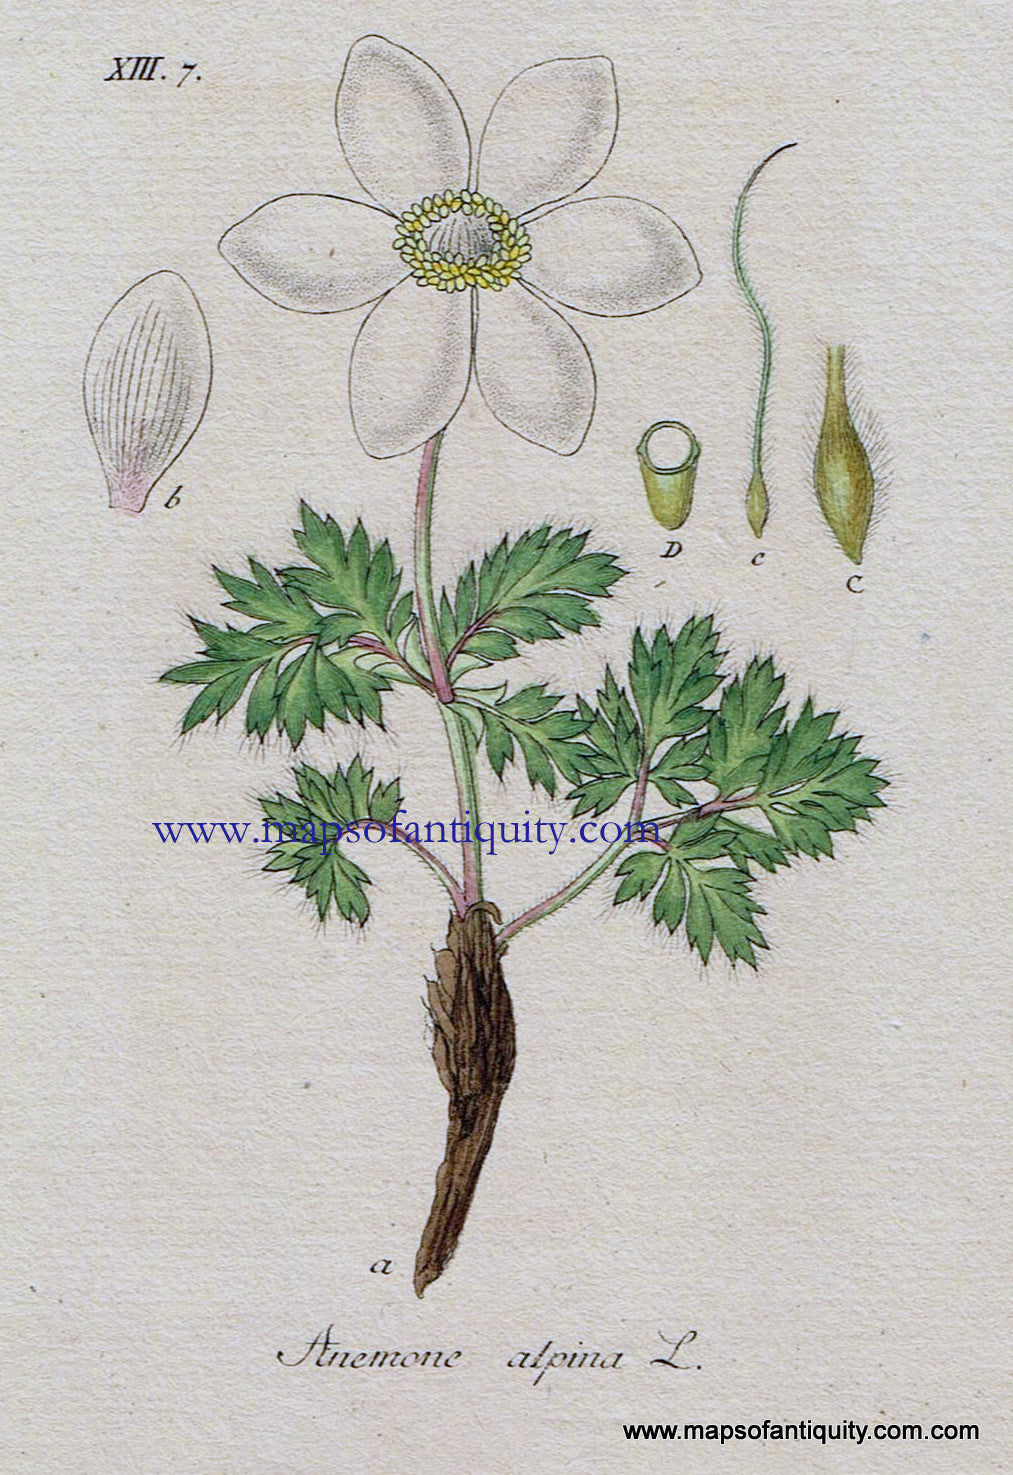 Antique-Hand-Colored-Botanical-Print-Anemone-alpina-L.-or-alpine-pasqueflower-Botanical-Illustration-Antique-Prints--Natural-History-Botanical-1828-Jacob-Sturm-Maps-Of-Antiquity